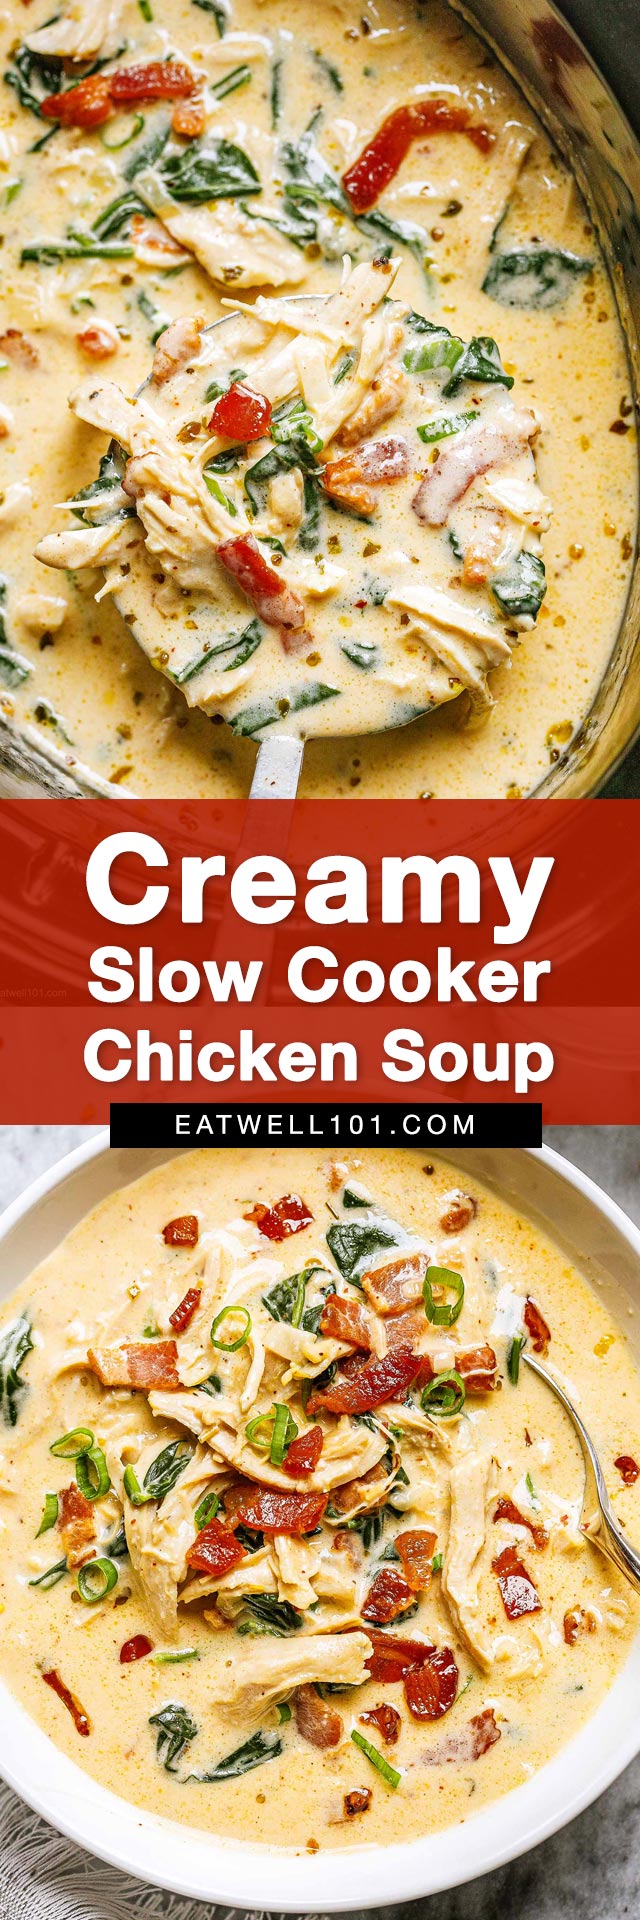 Slow Cooker Cream Cheese Crack Chicken Recipe - #slow-cooker #chicken #soup #recipe #eatwell101 - This slow cooker crack chicken soup is incredible and full of cheesy flavor!